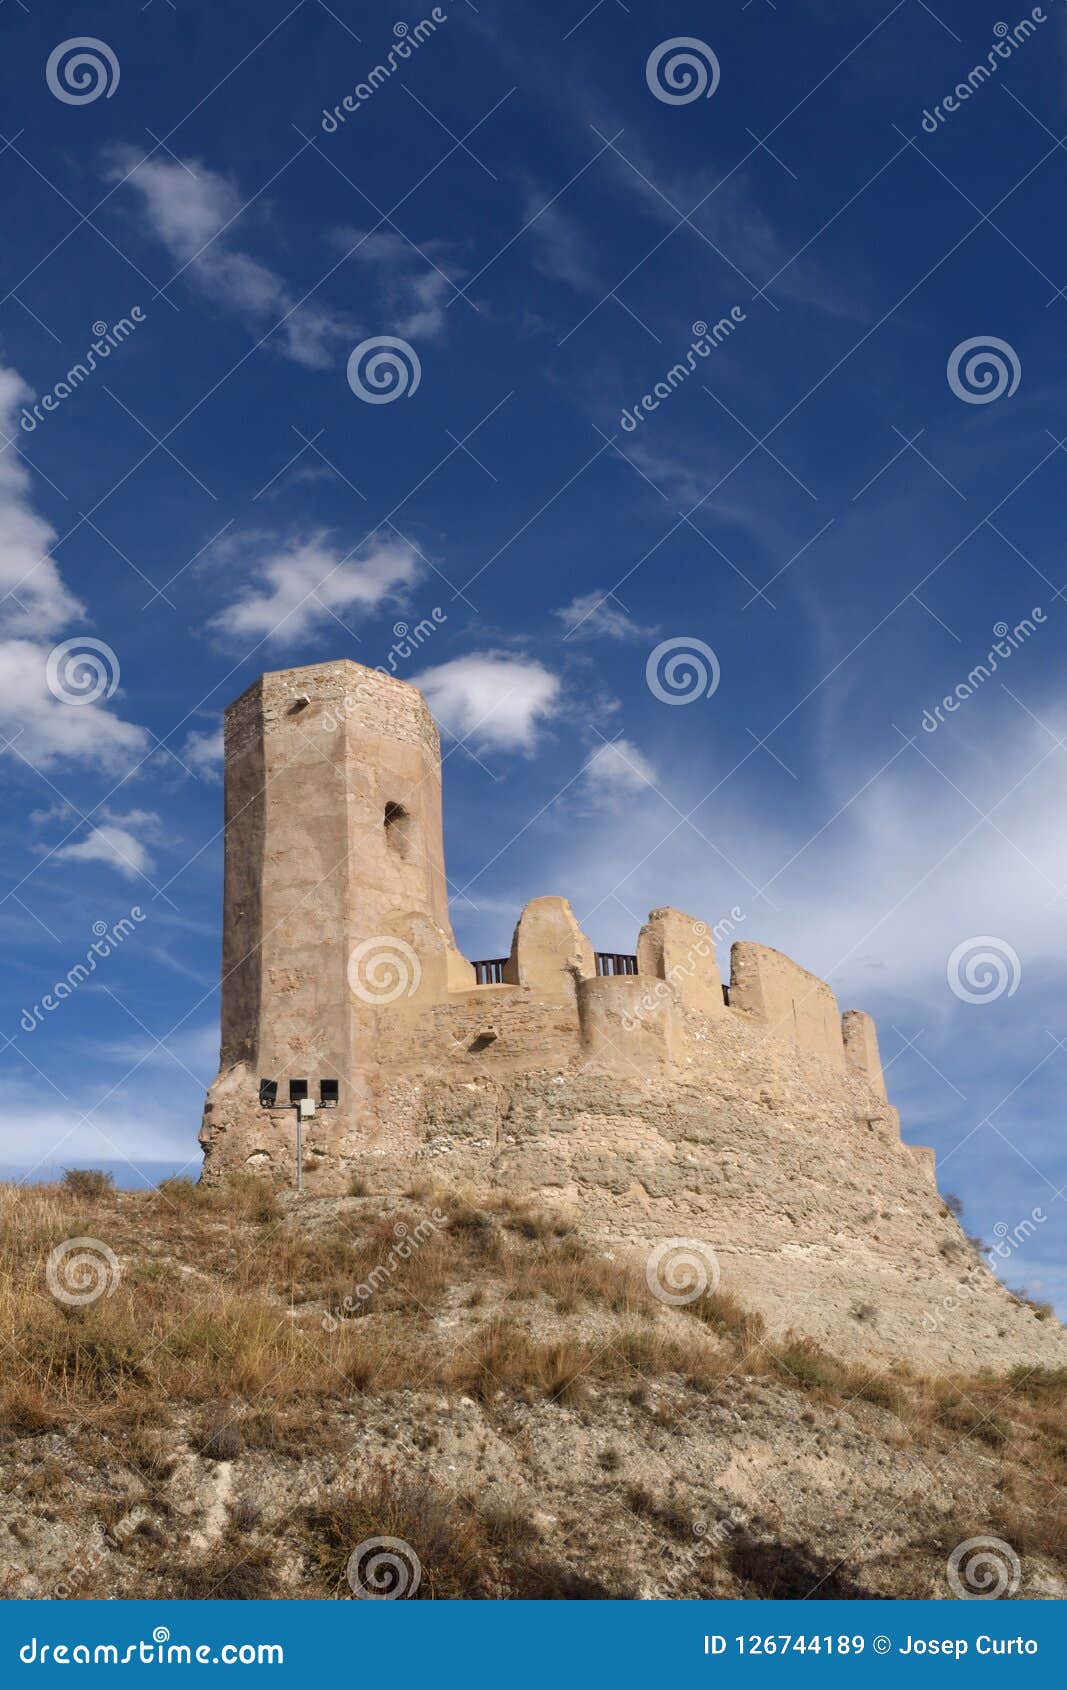 castle of ayab in calatayud, zaragoza province, aragon, spain